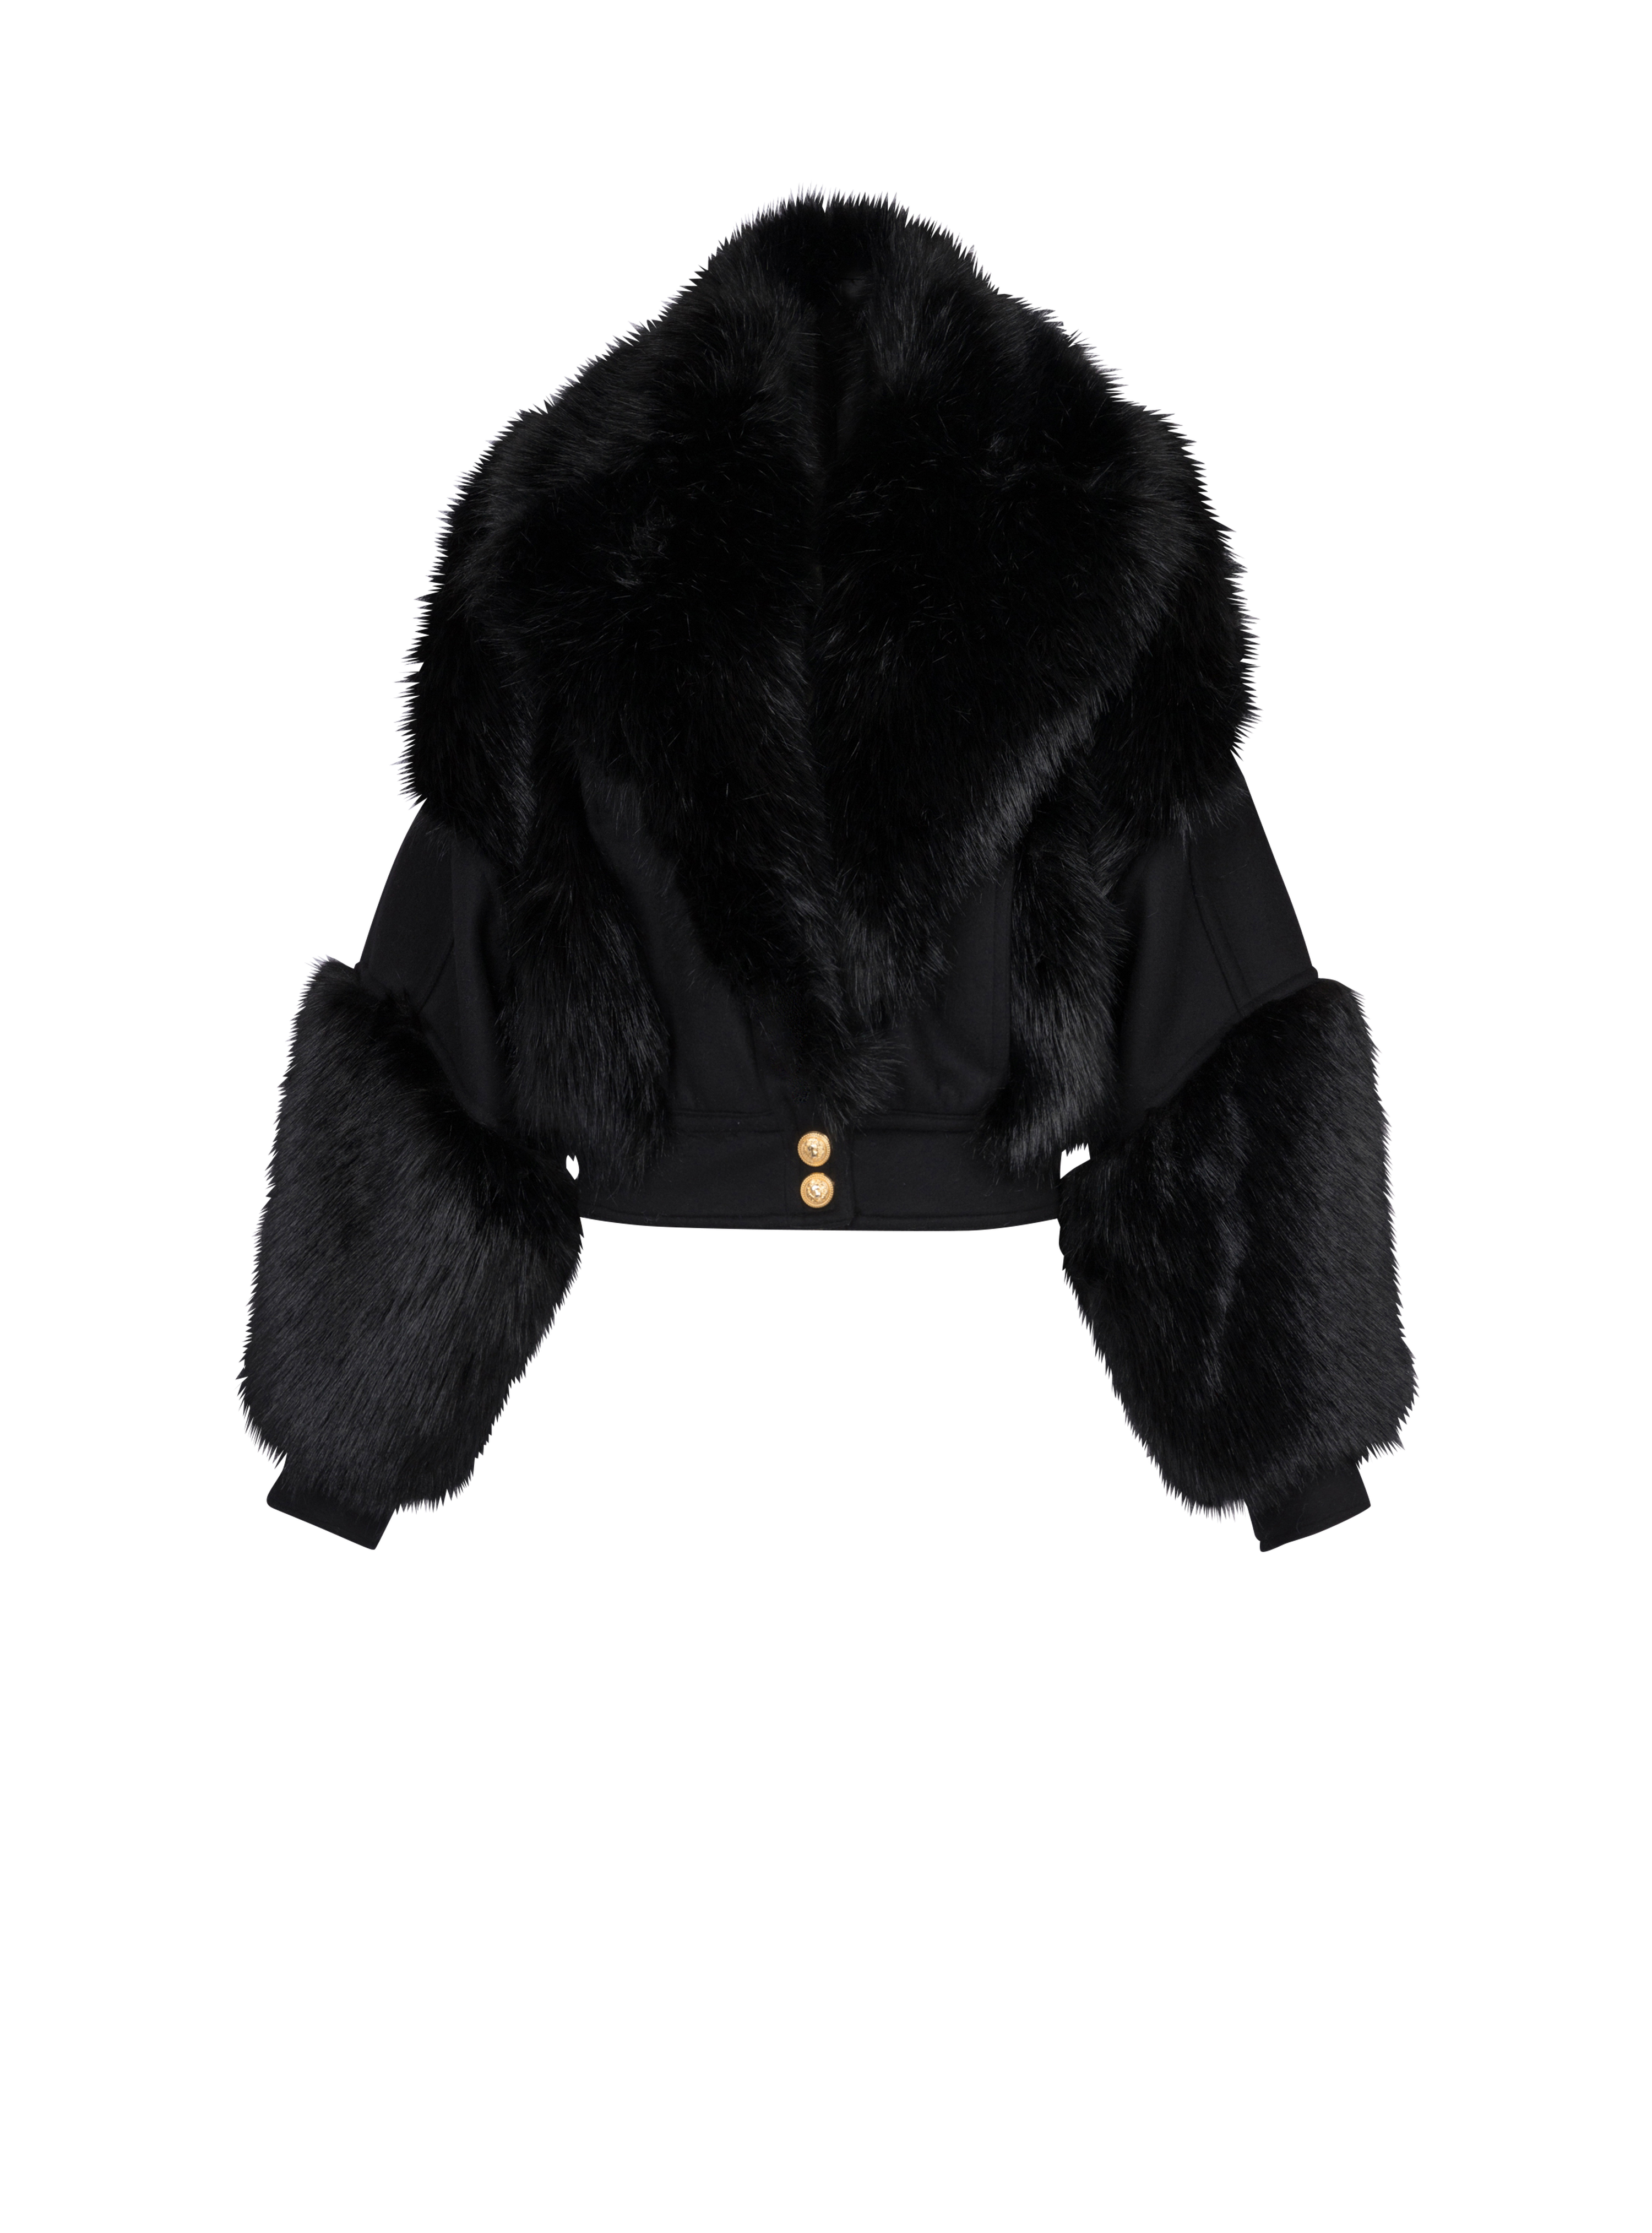 Wool and faux fur jacket, black